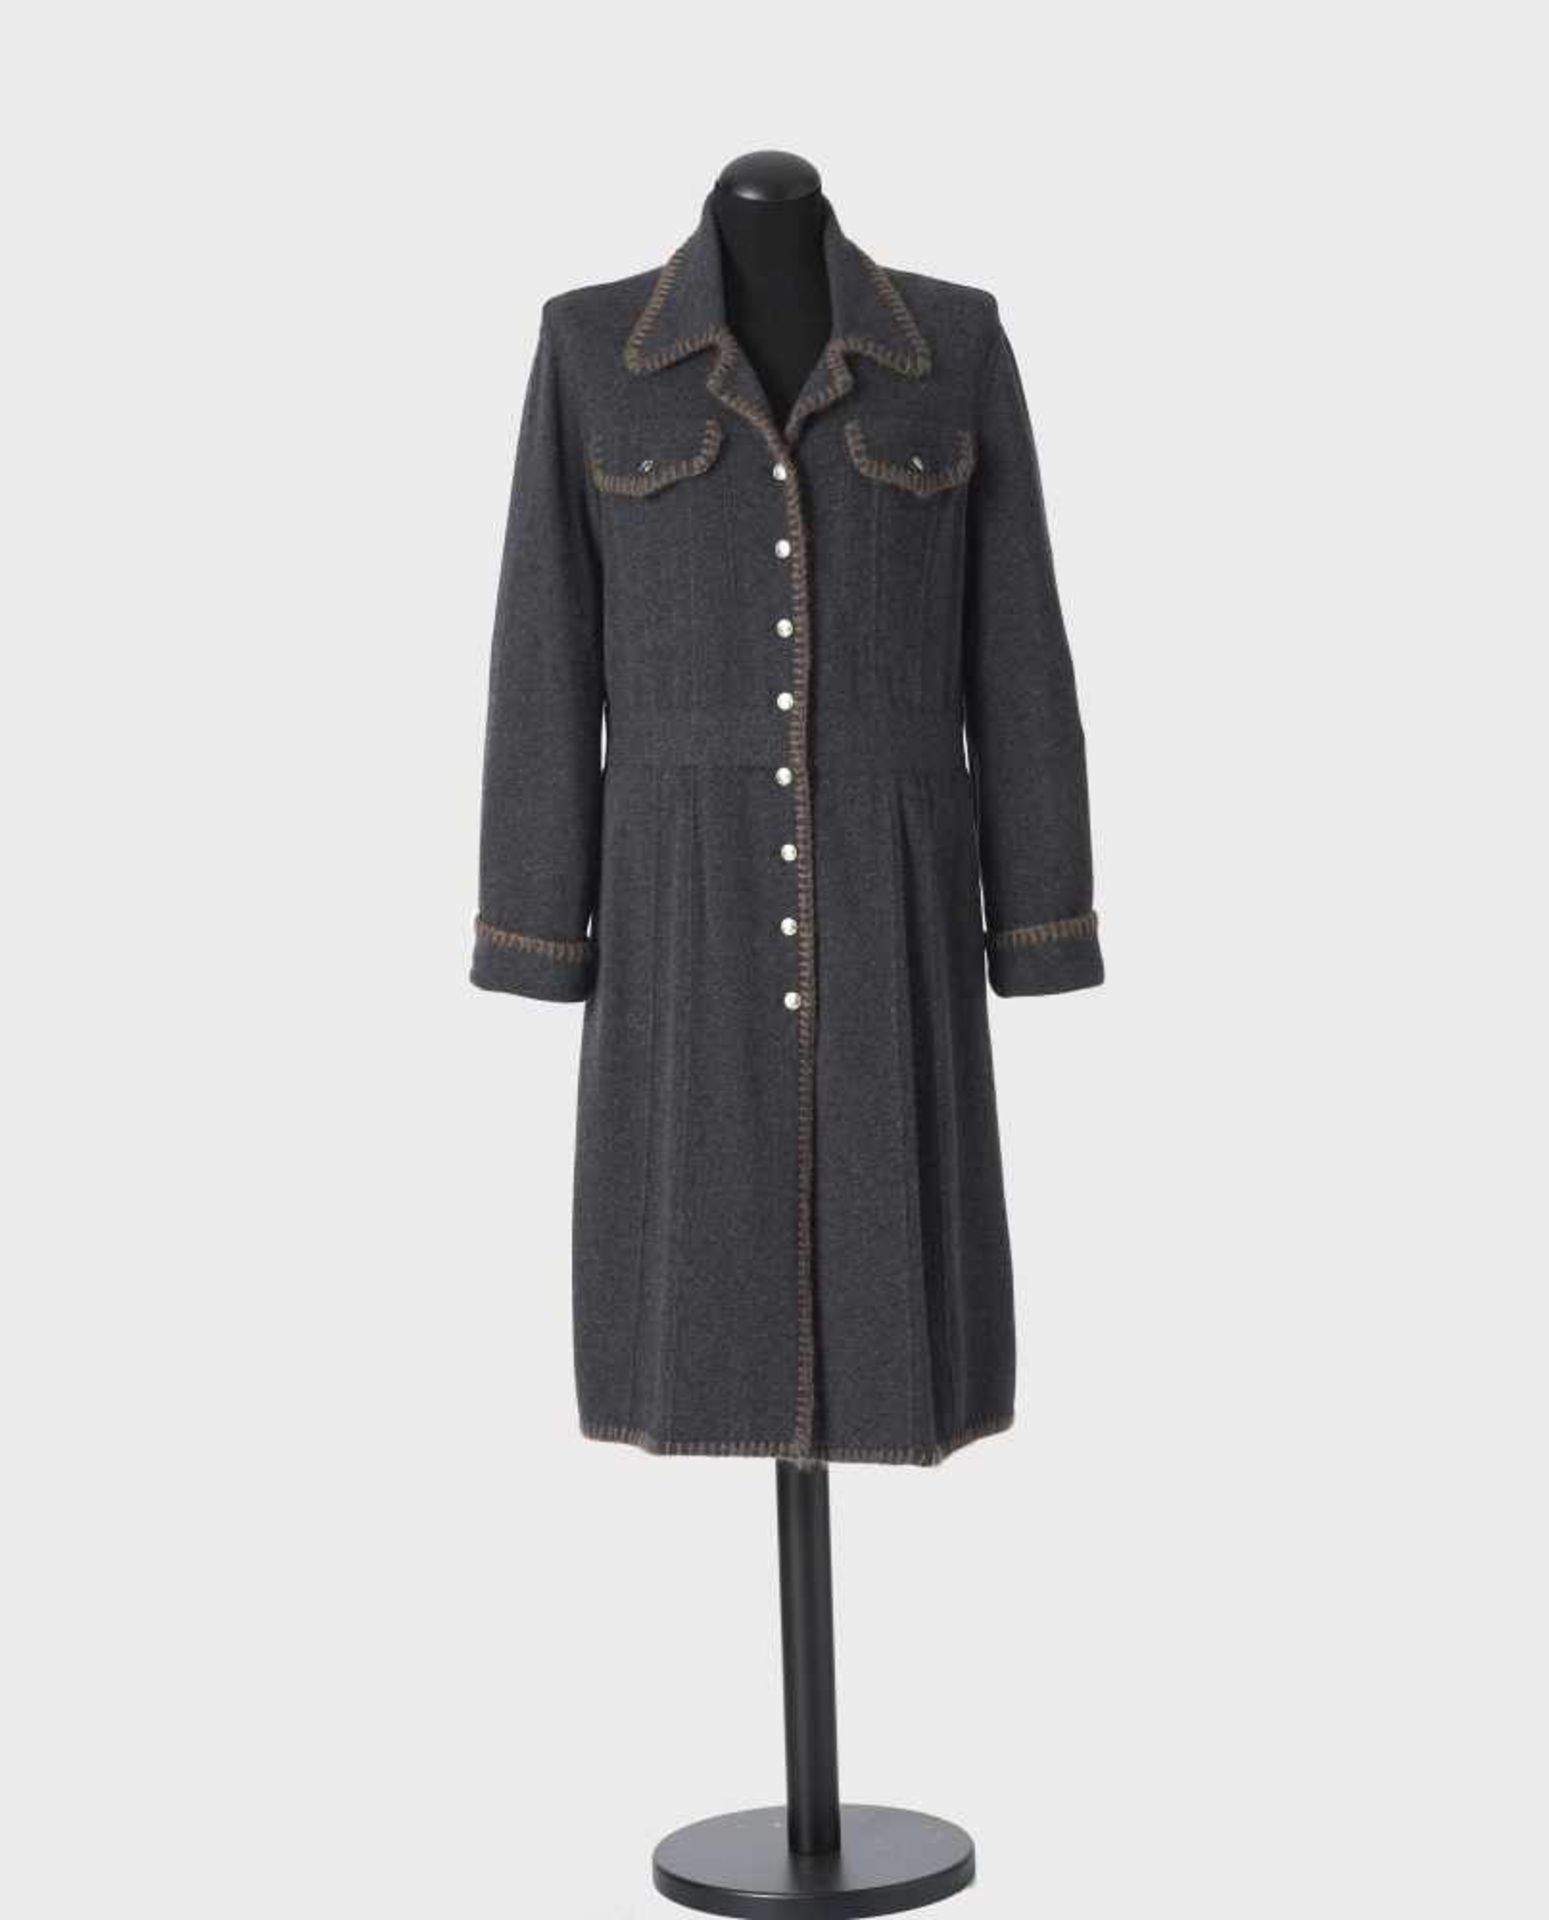 Coat/DressJohn Galliano for Christian Dior Boutique, Paris Ready-To-Wear Collection Winter 1997